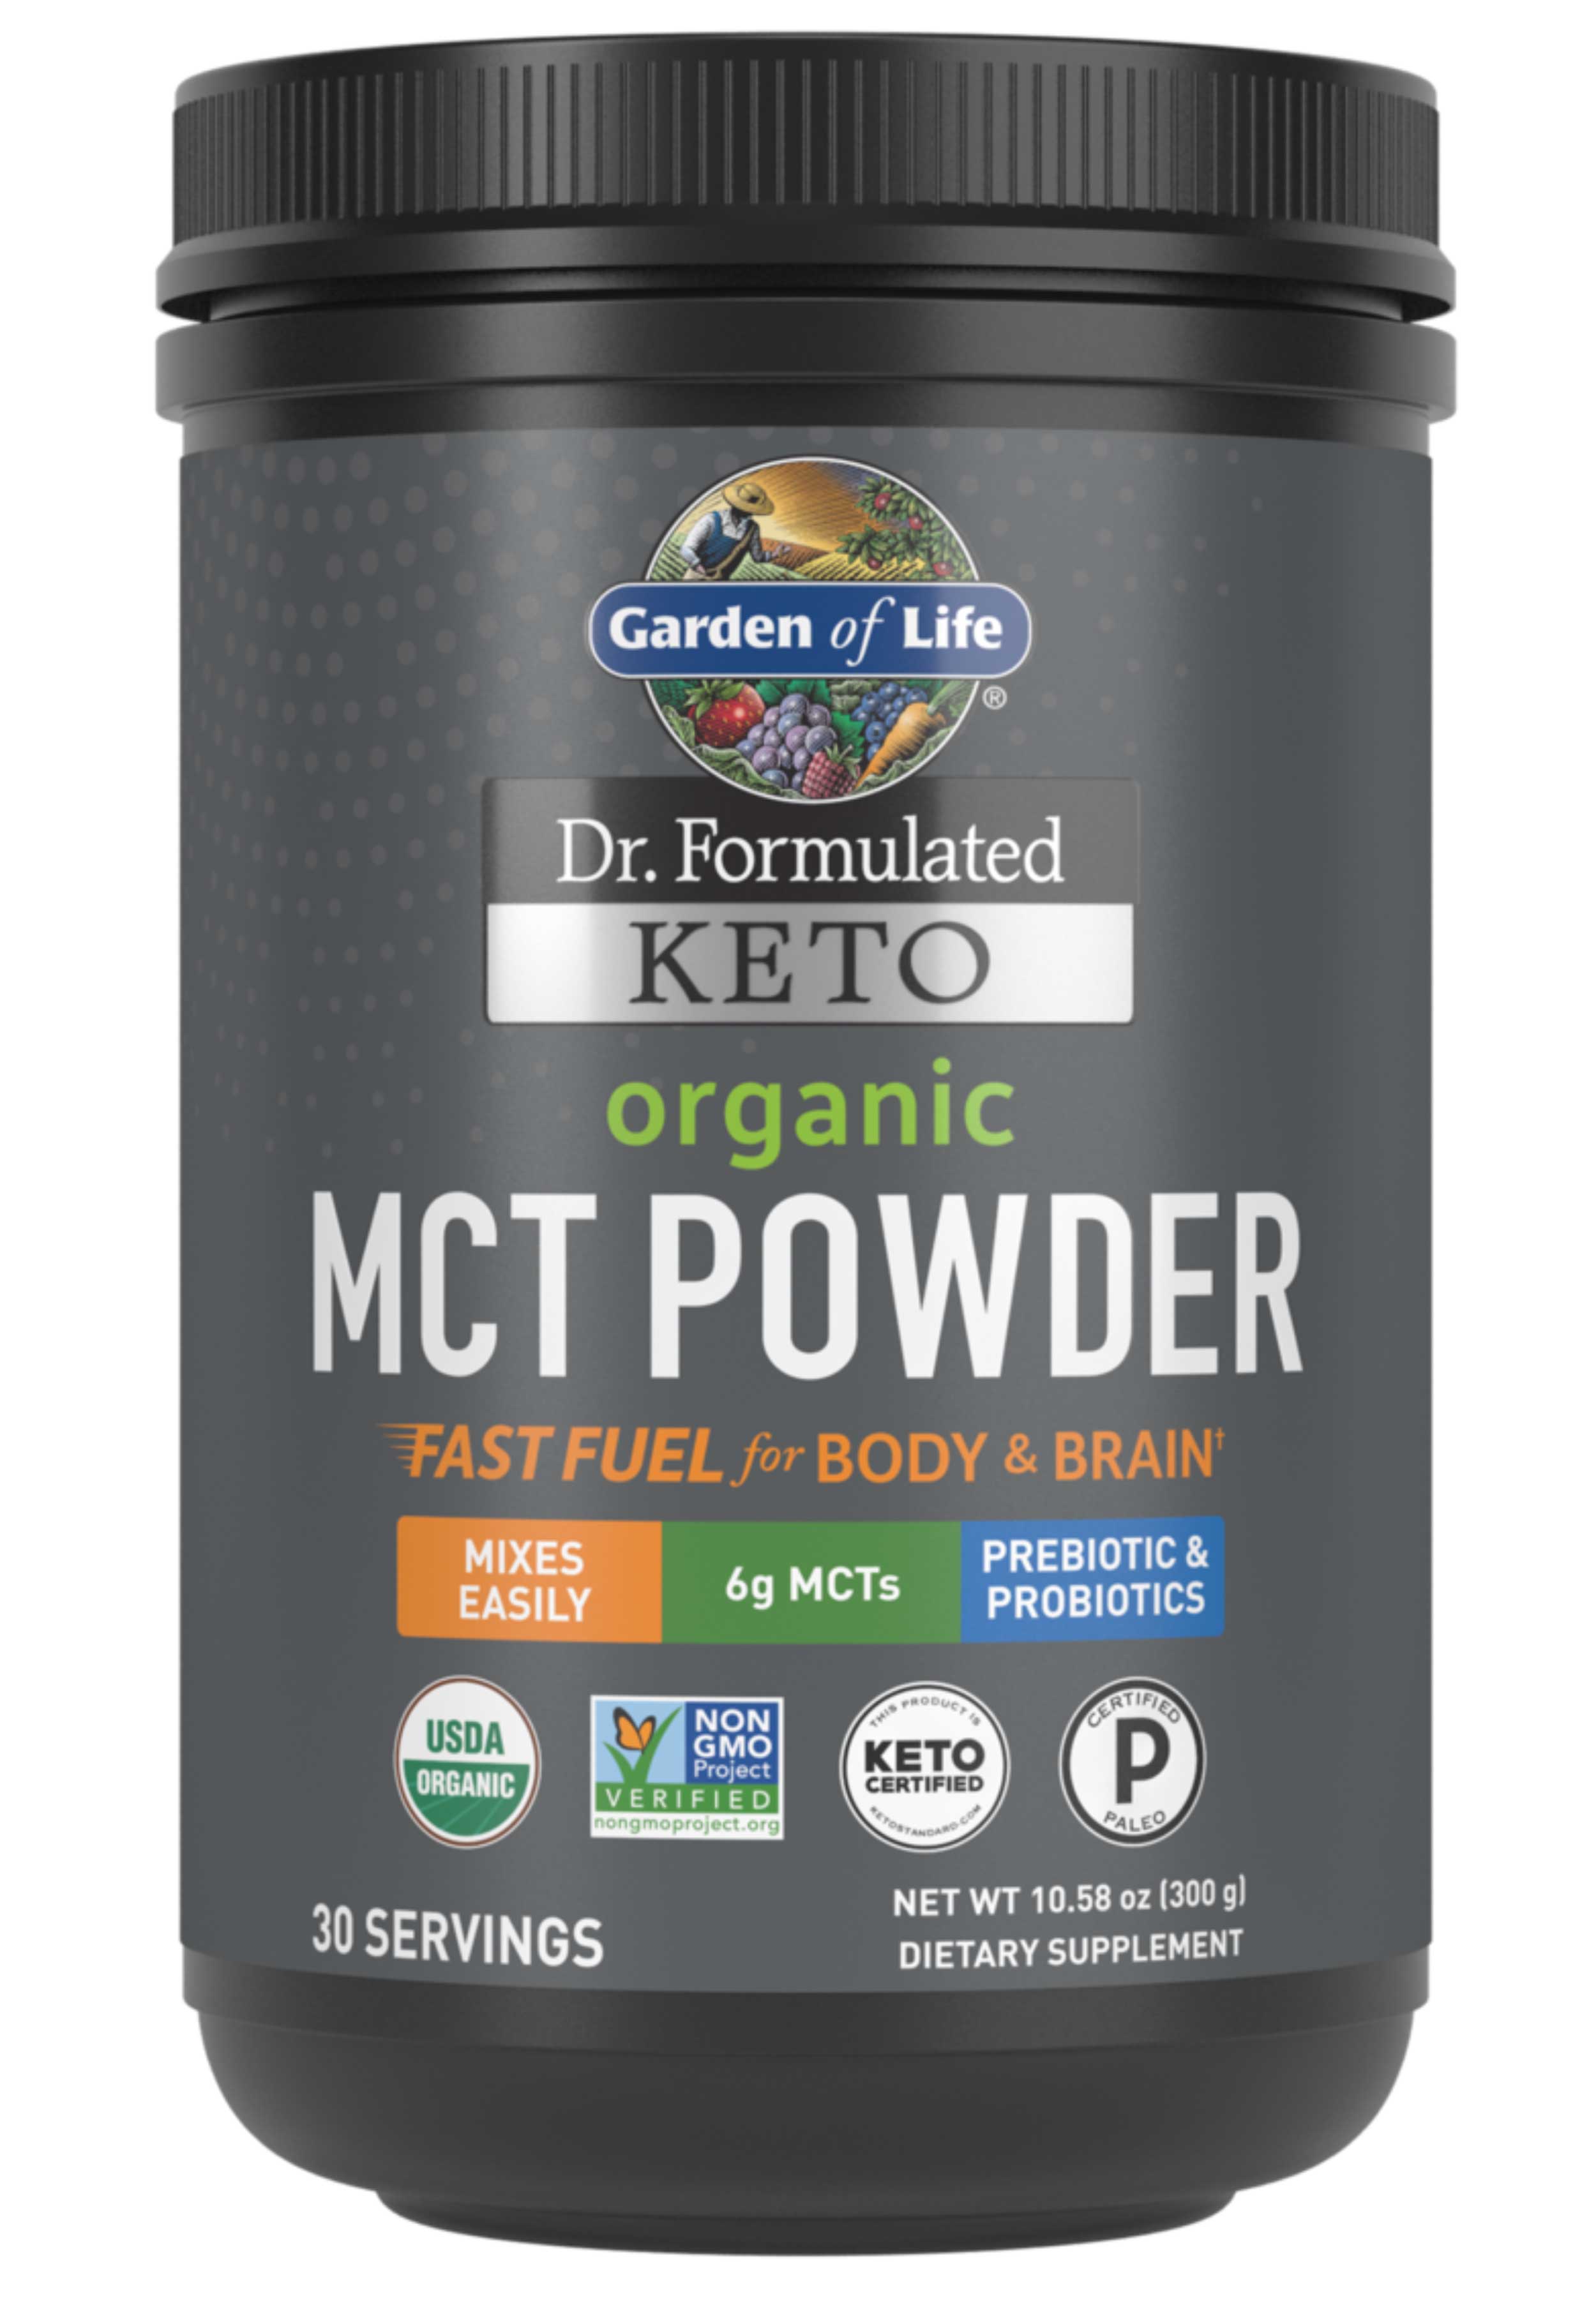 Garden of Life Dr. Formulated Keto Organic MCT Powder